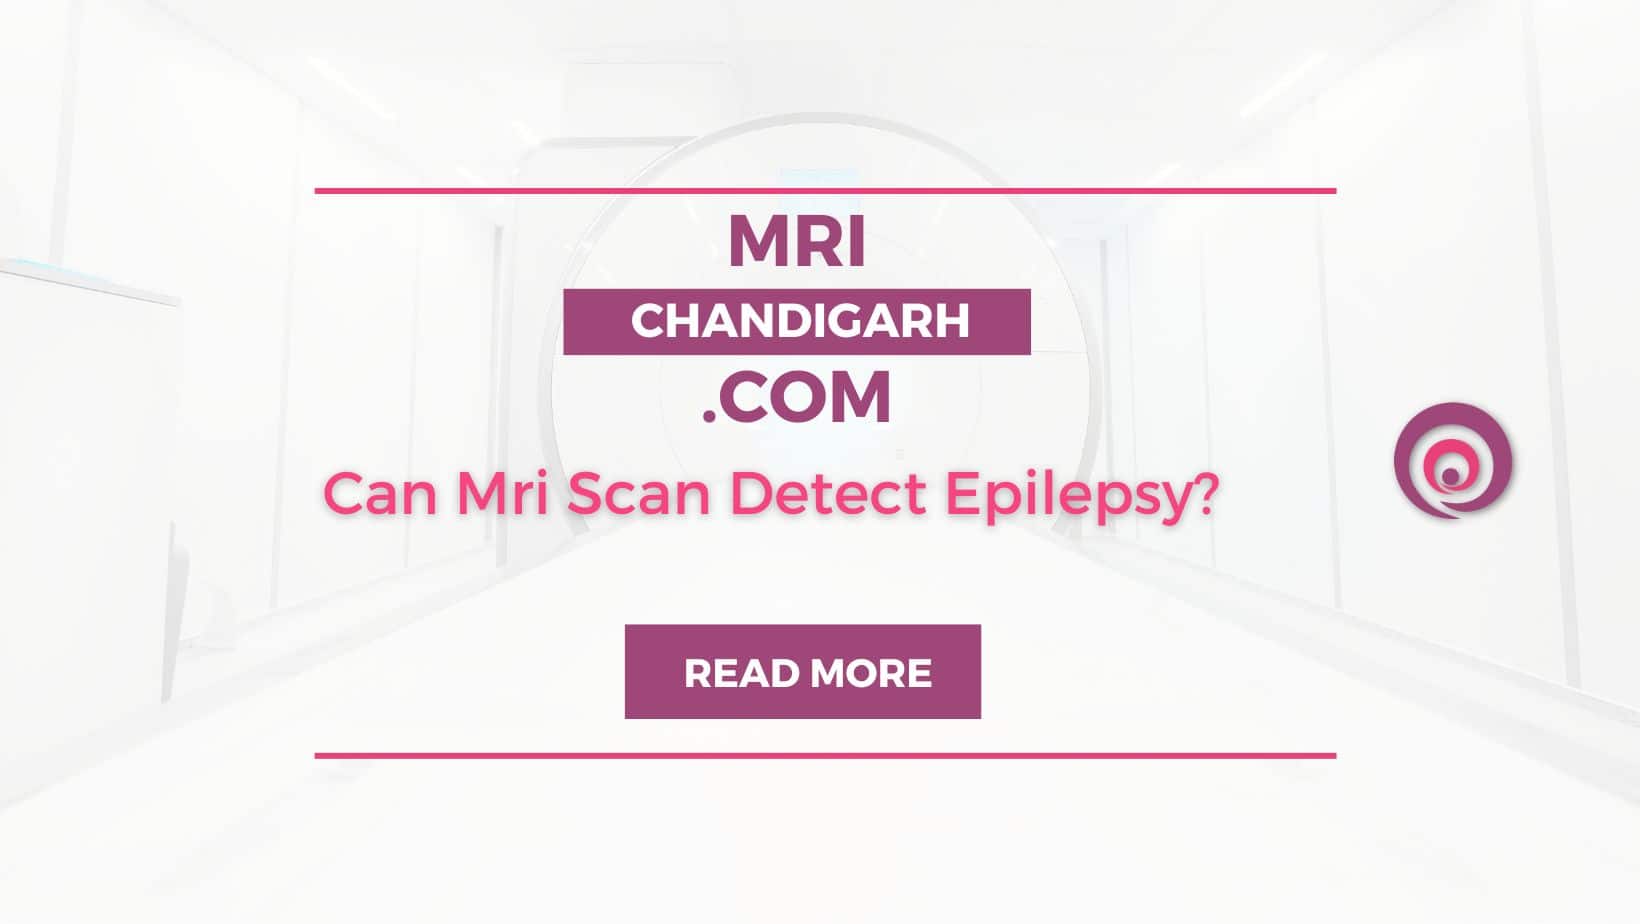 Can Mri Scan Detect Epilepsy?